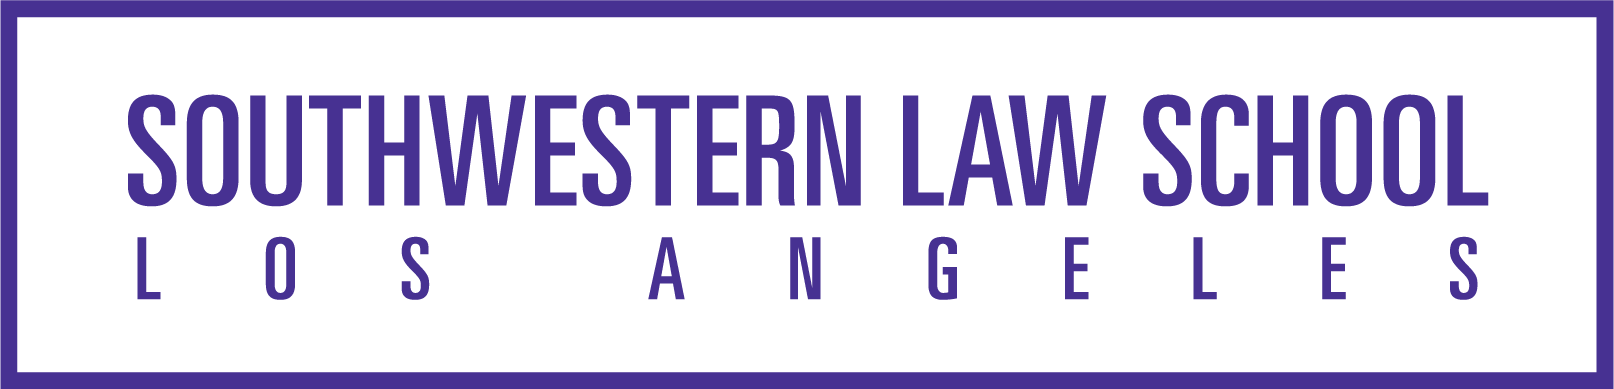 Southwestern Brand Identity in Prager Purple PNG